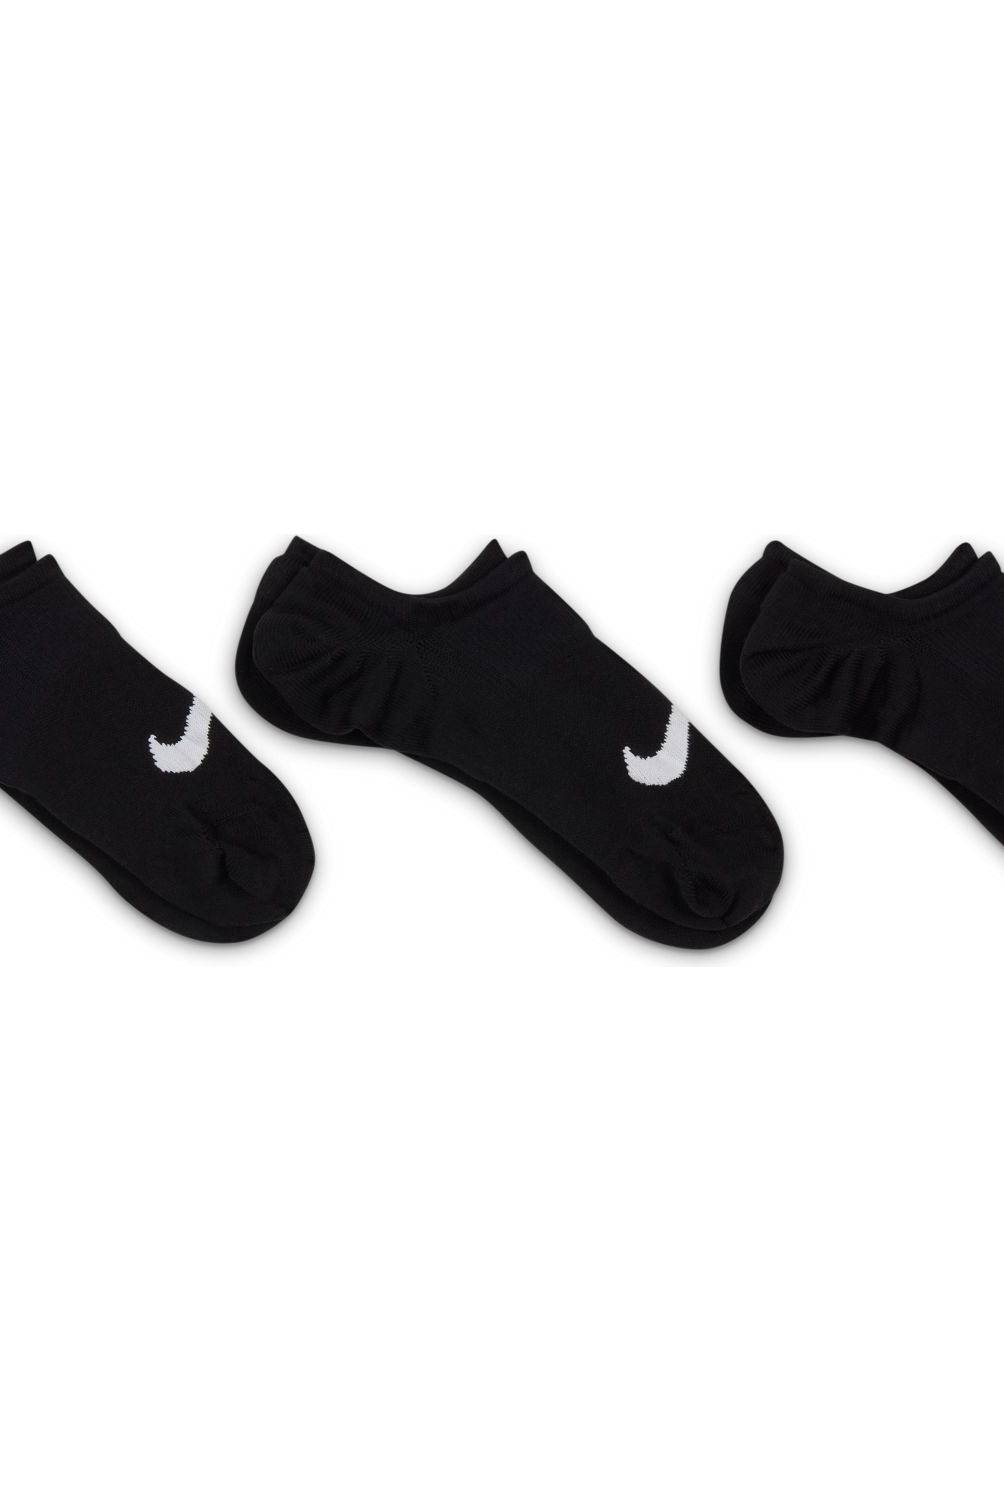 NIKE Pack De 3 Calcetines Deportivos Mujer Nike